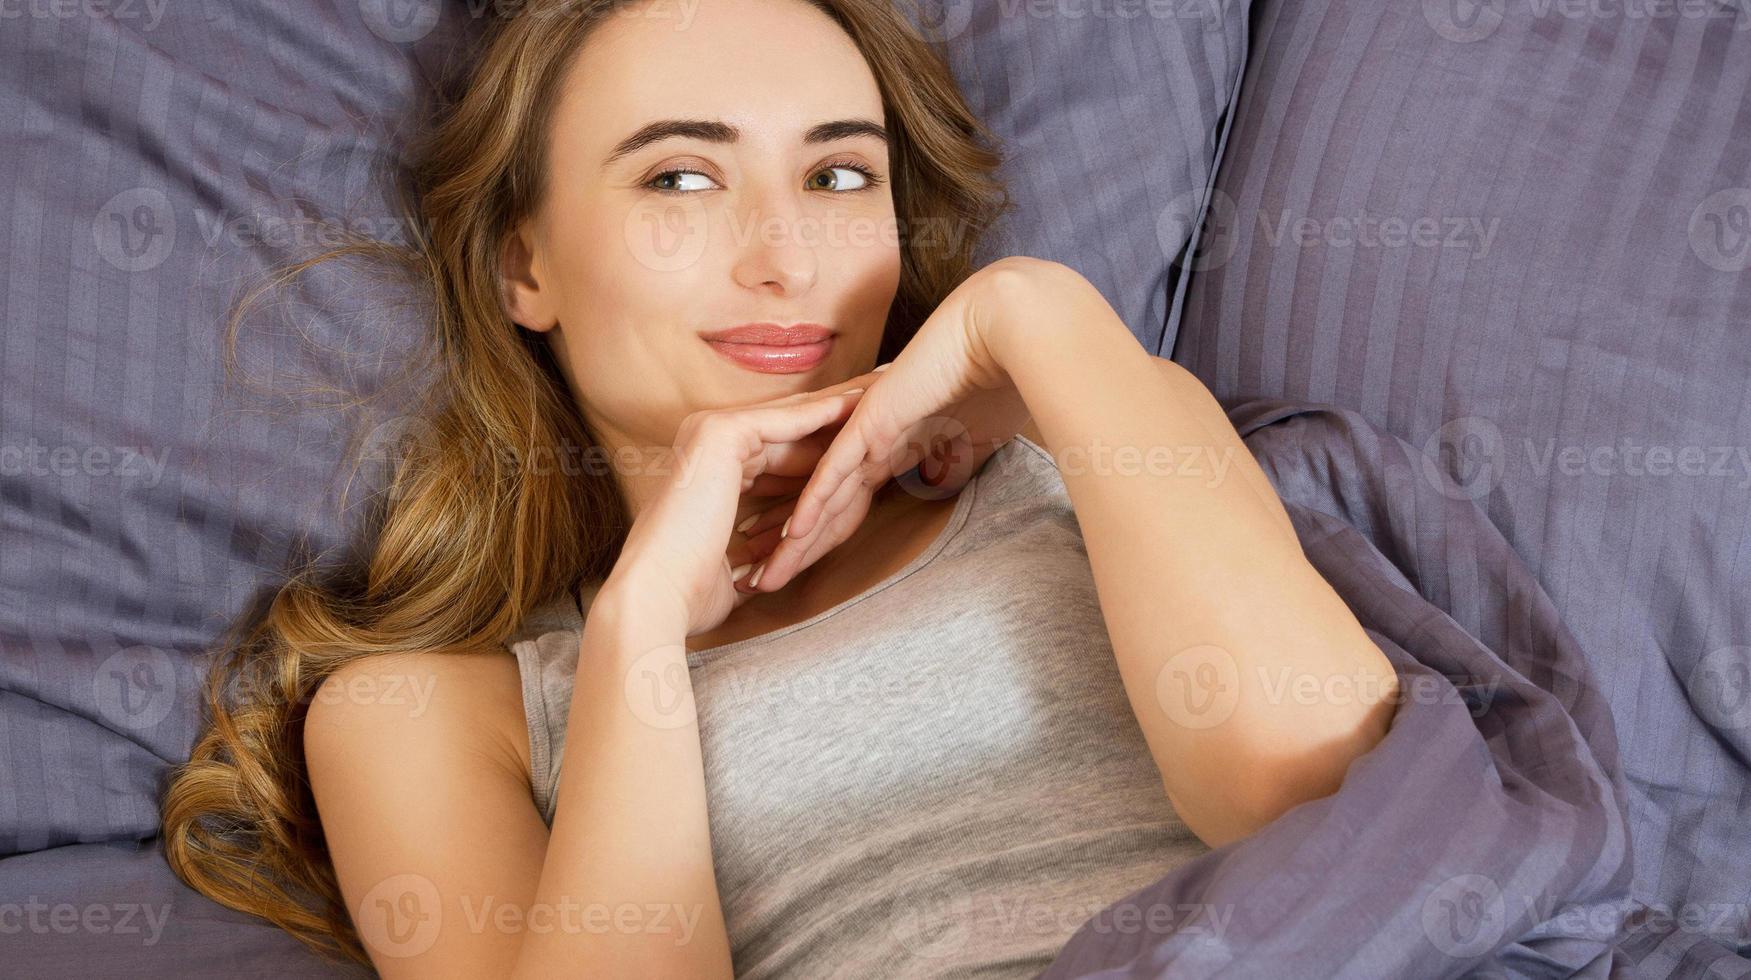 mooie jonge mooie vrouw op bed in modern appartement glimlachend na wakker worden? foto